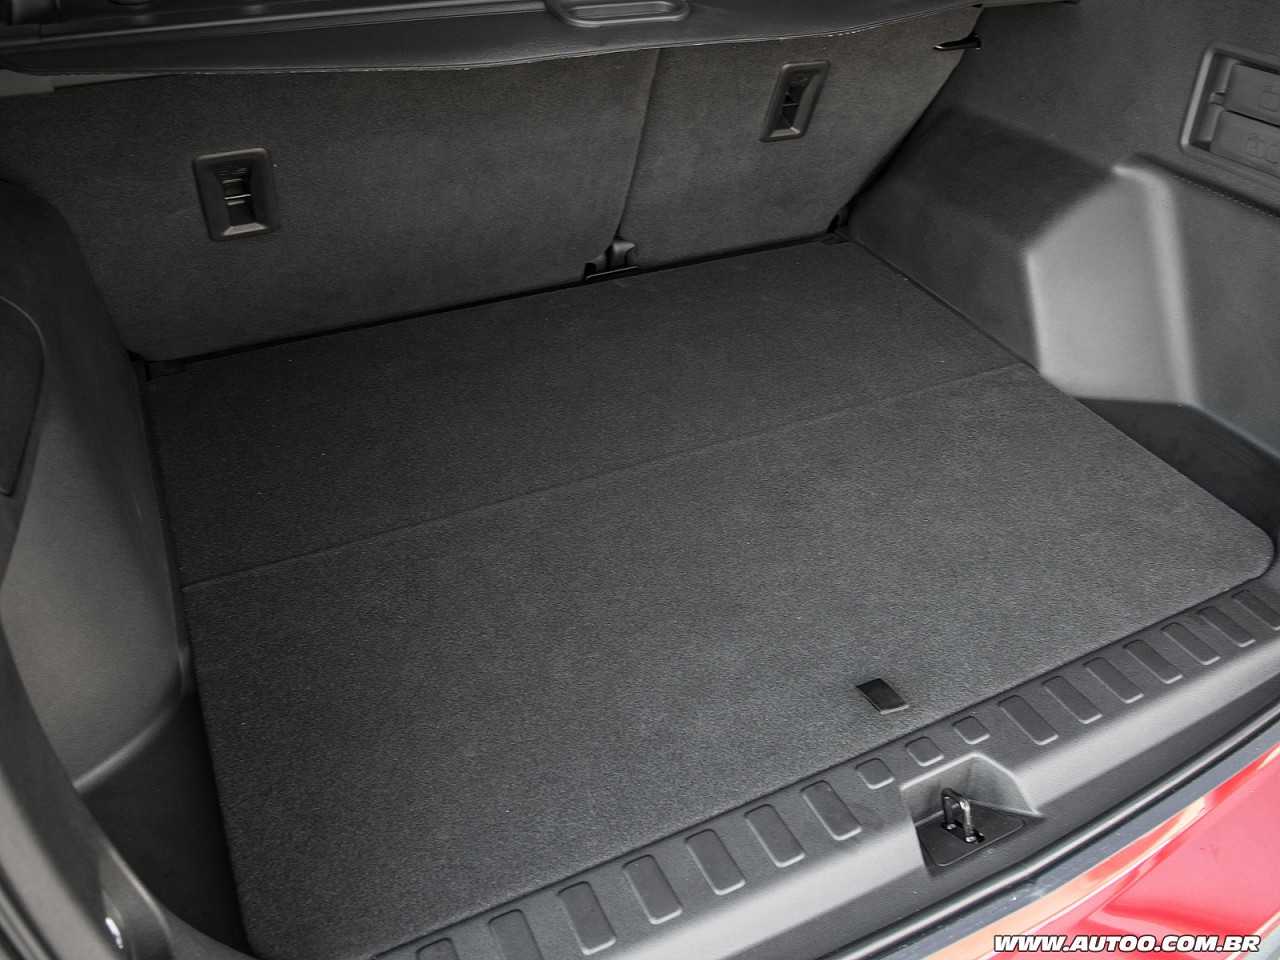 ChevroletEquinox 2018 - porta-malas